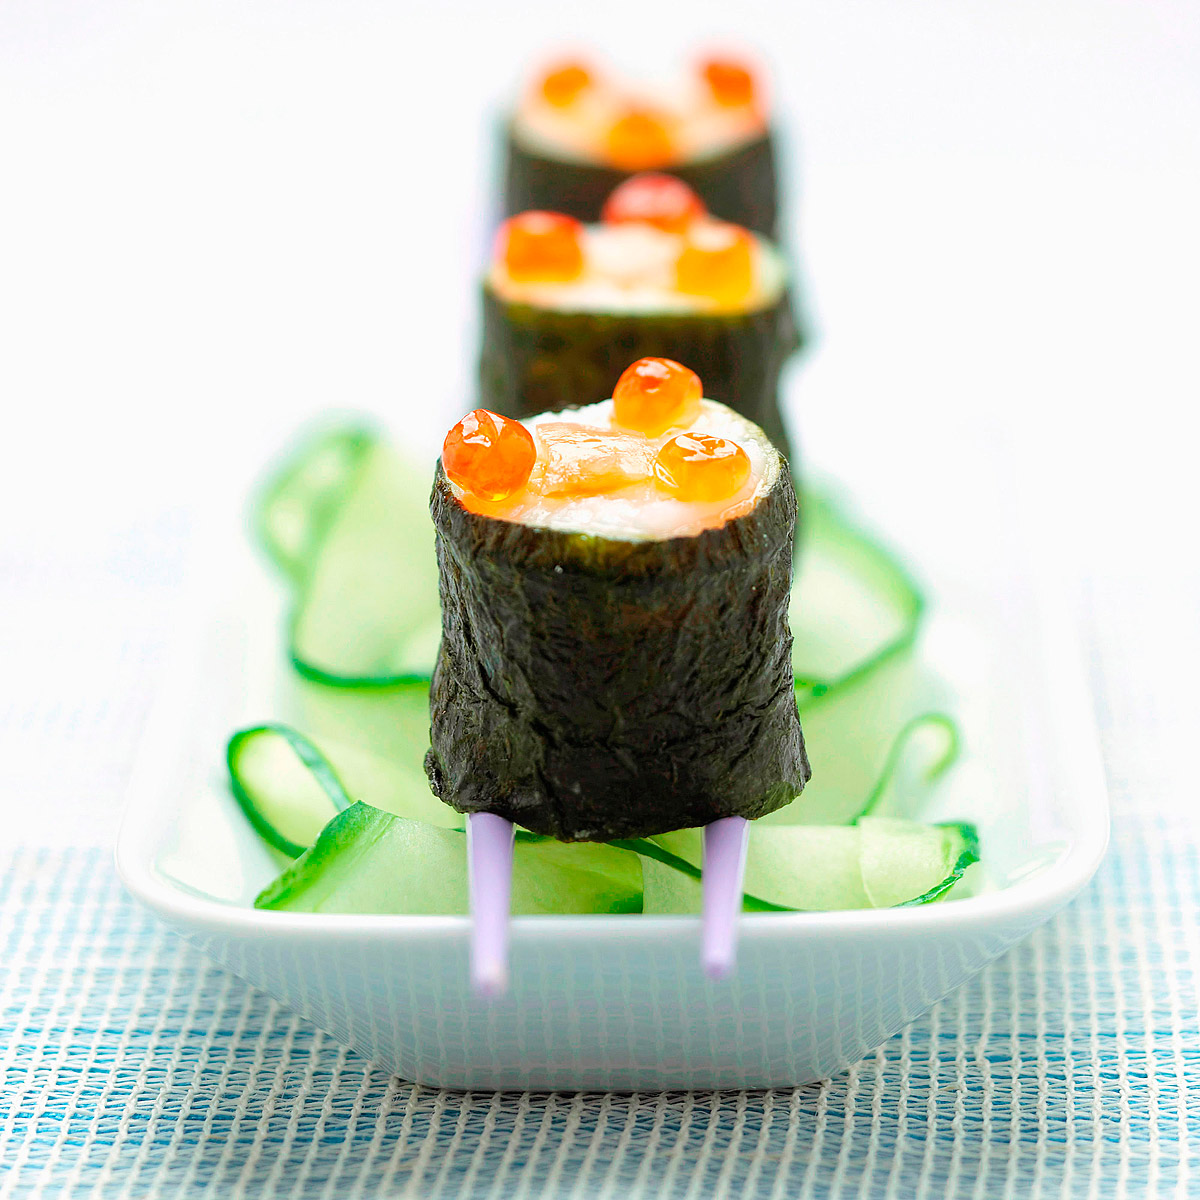 Sushi vegetal